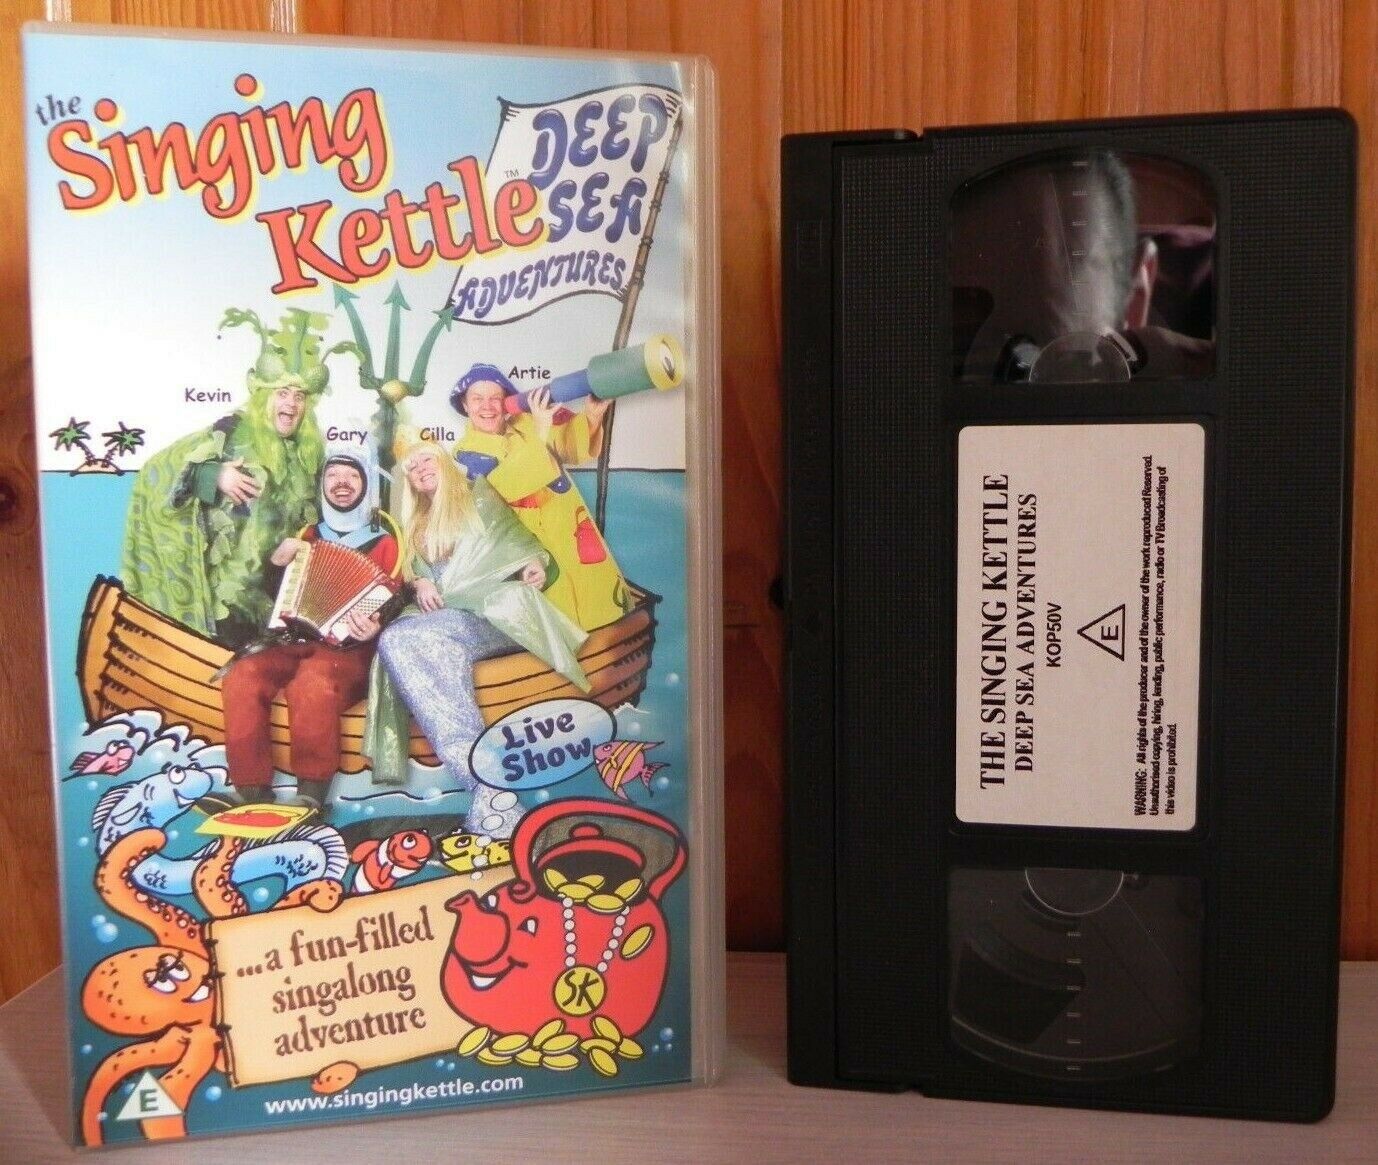 The Singing Kettle:Cilla Fisher/Artie Trezise (2004) - Deep Sea Adventures - VHS-